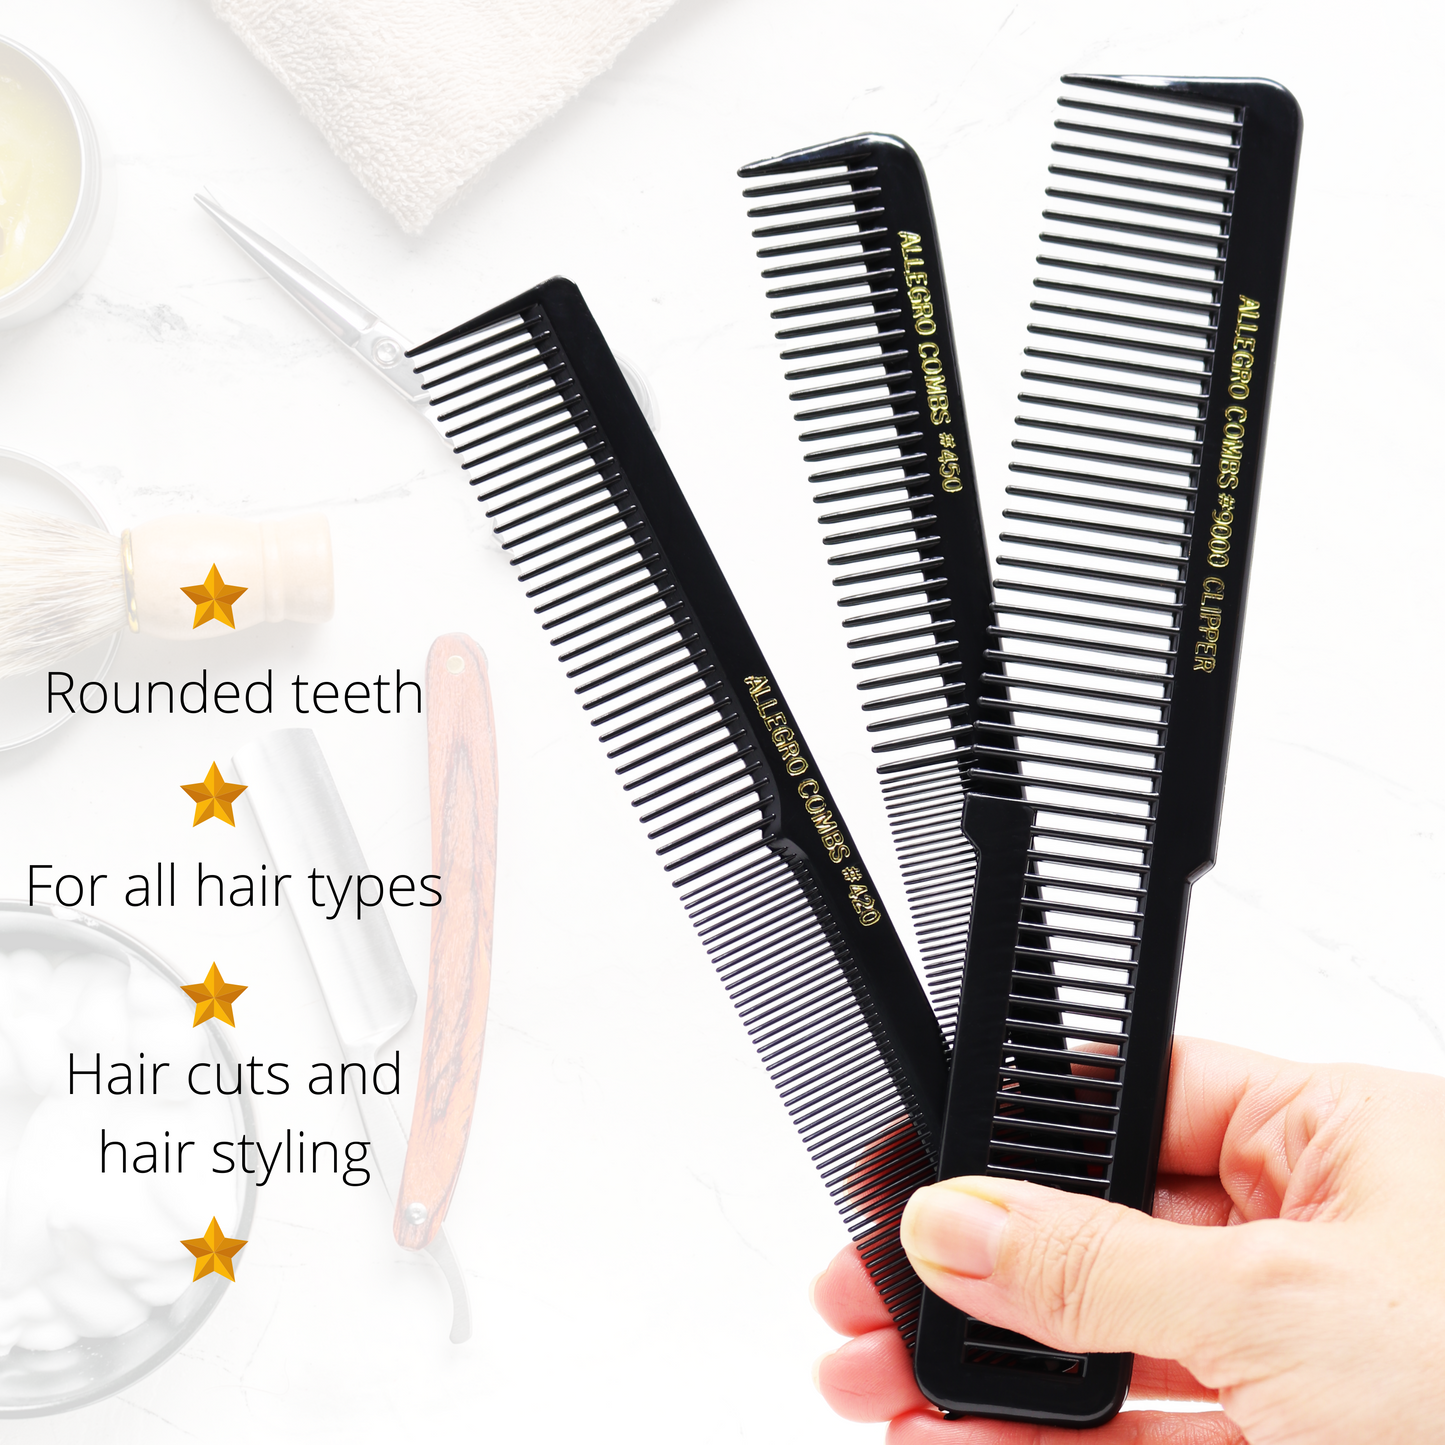 Allegro Combs Barber Comb Set Hair Cutting Combs. Tapered Comb, Stylist Comb, Flat Top Combs Clipper Comb. Back 3 Pc